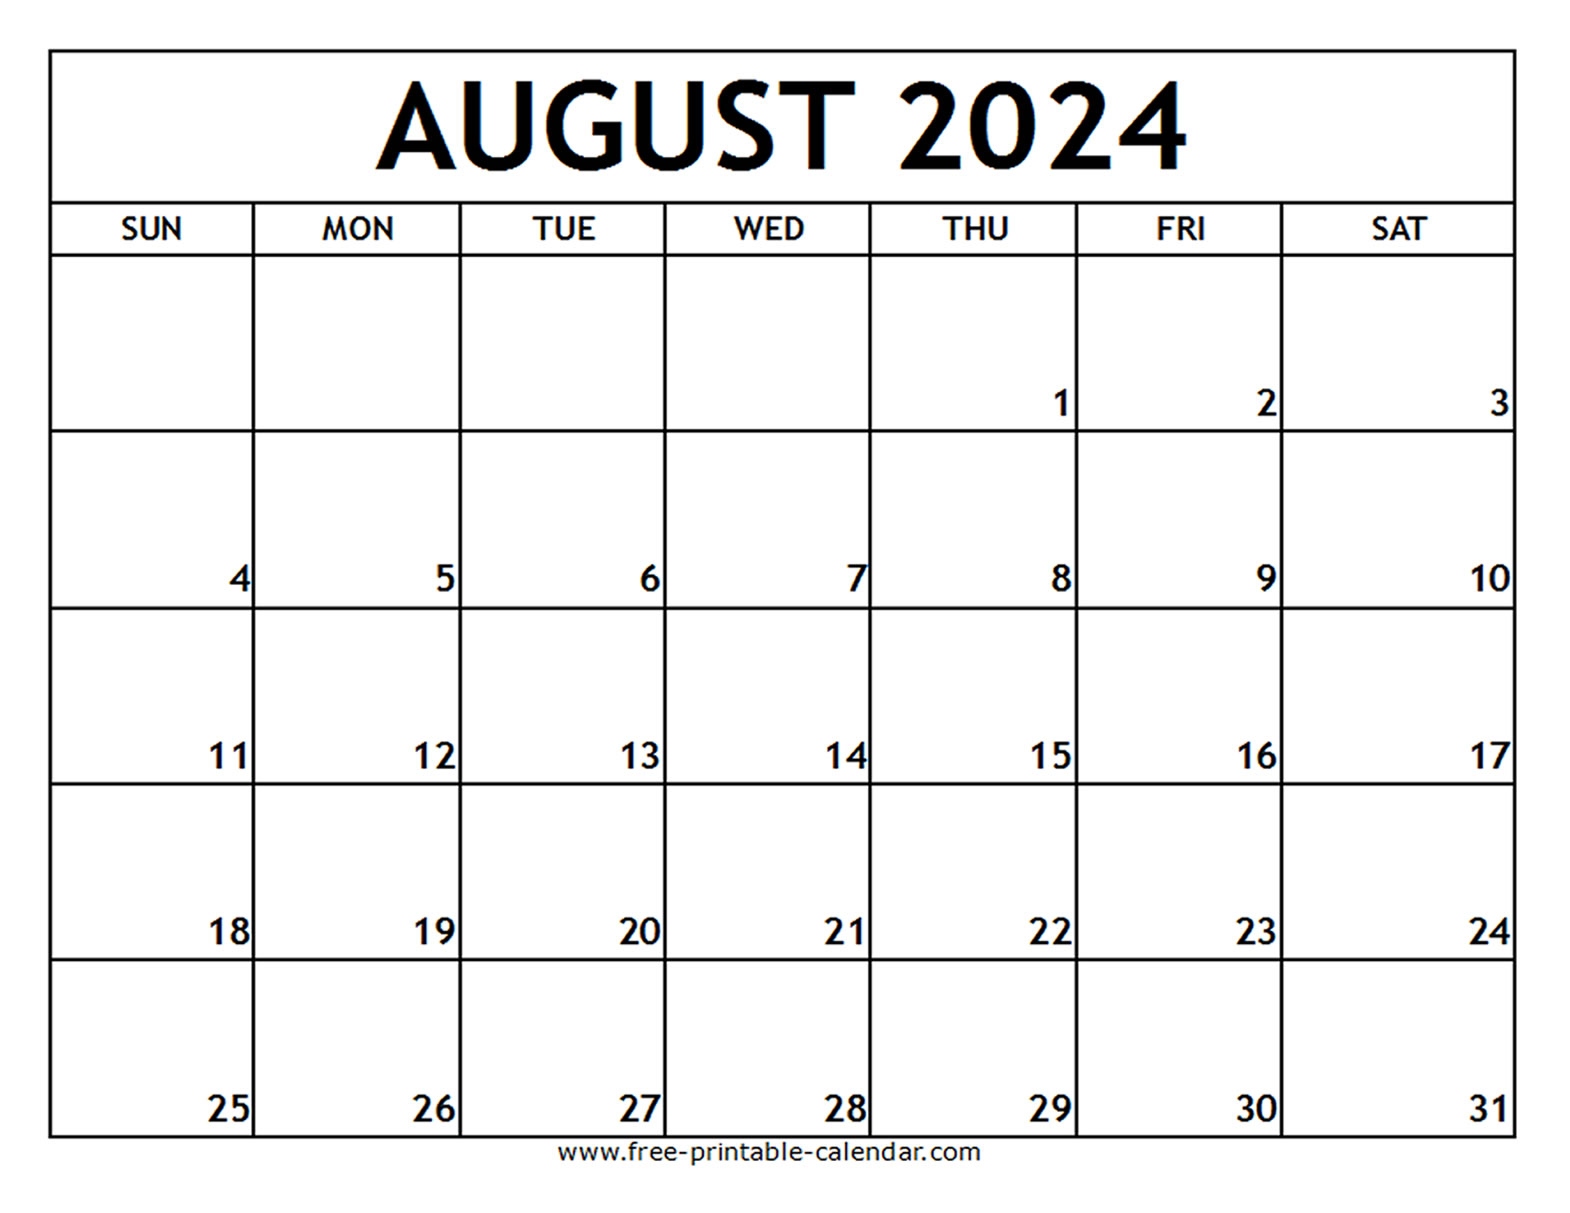 August 2024 Printable Calendar - Free-Printable-Calendar inside Free Printable Calendar August 2024 Uk